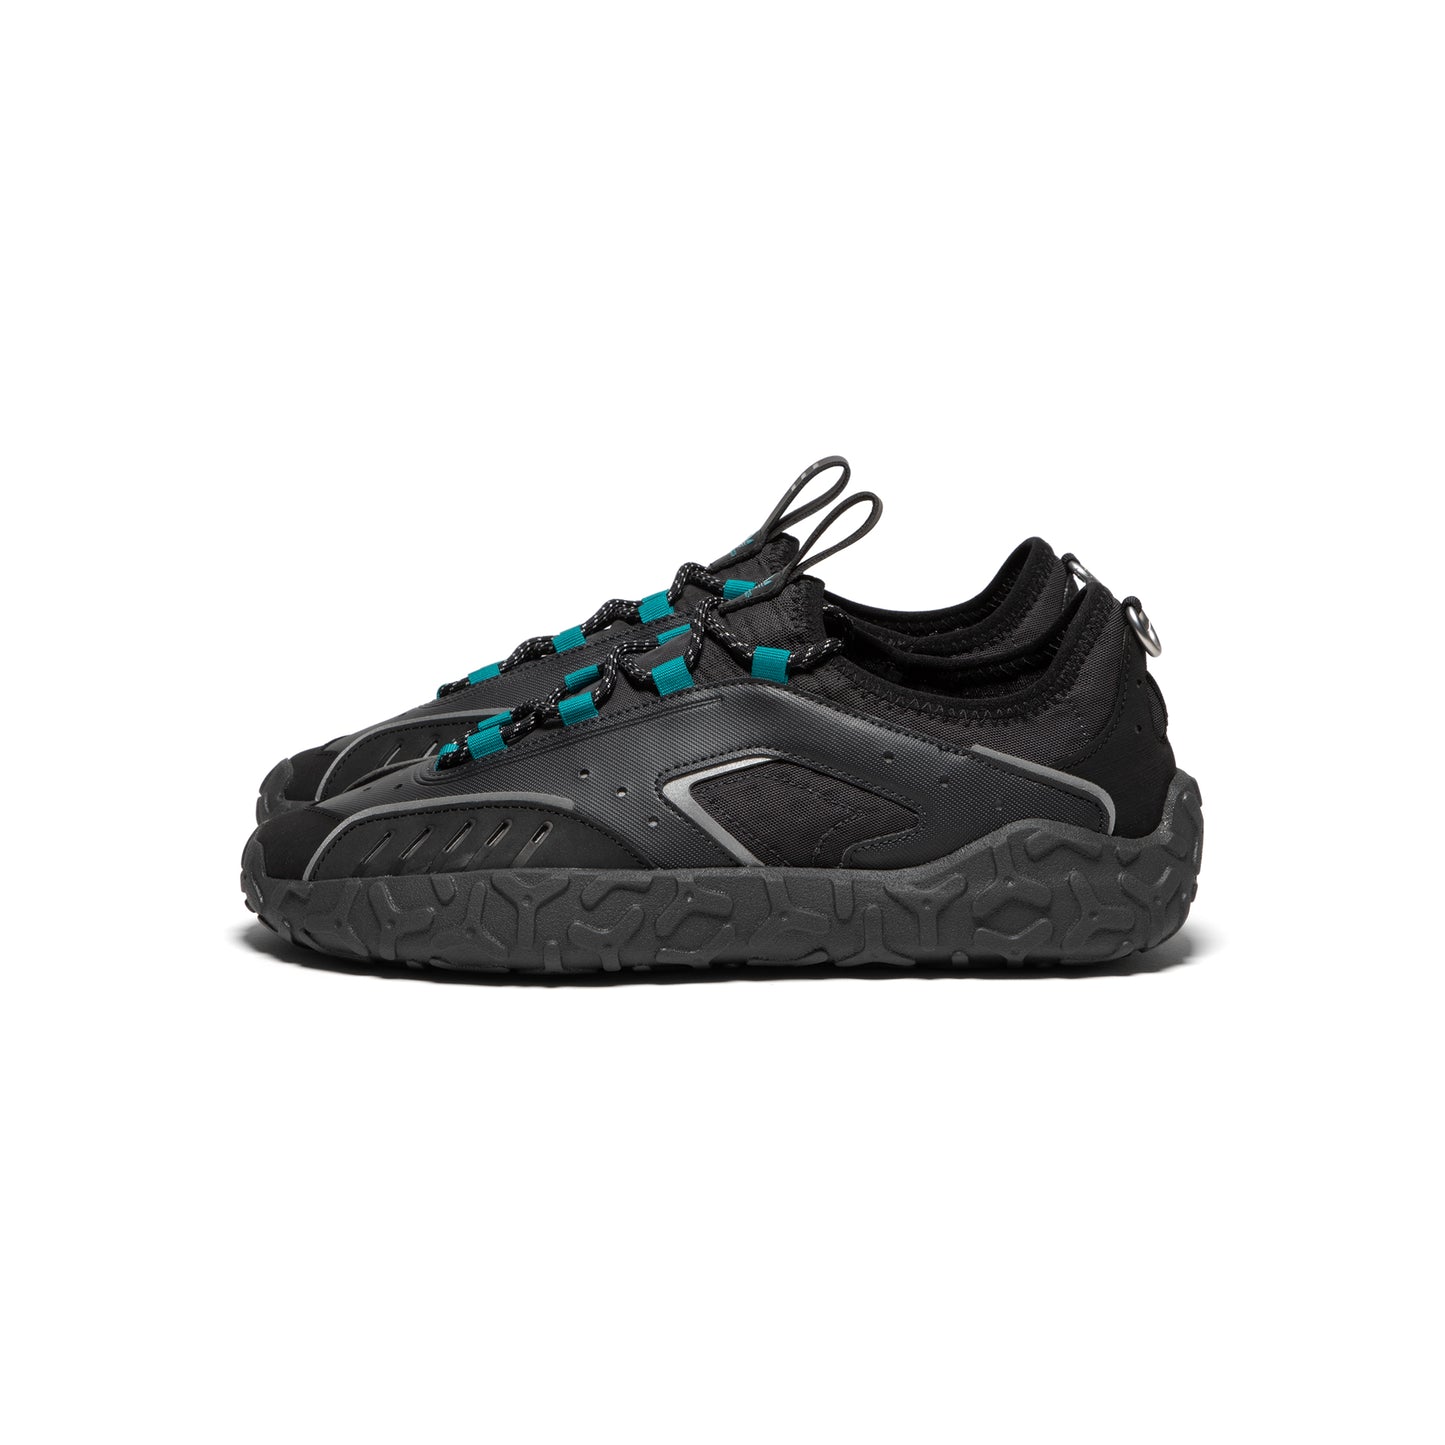 adidas Atric23 (Core Black/Carbon/Teal)